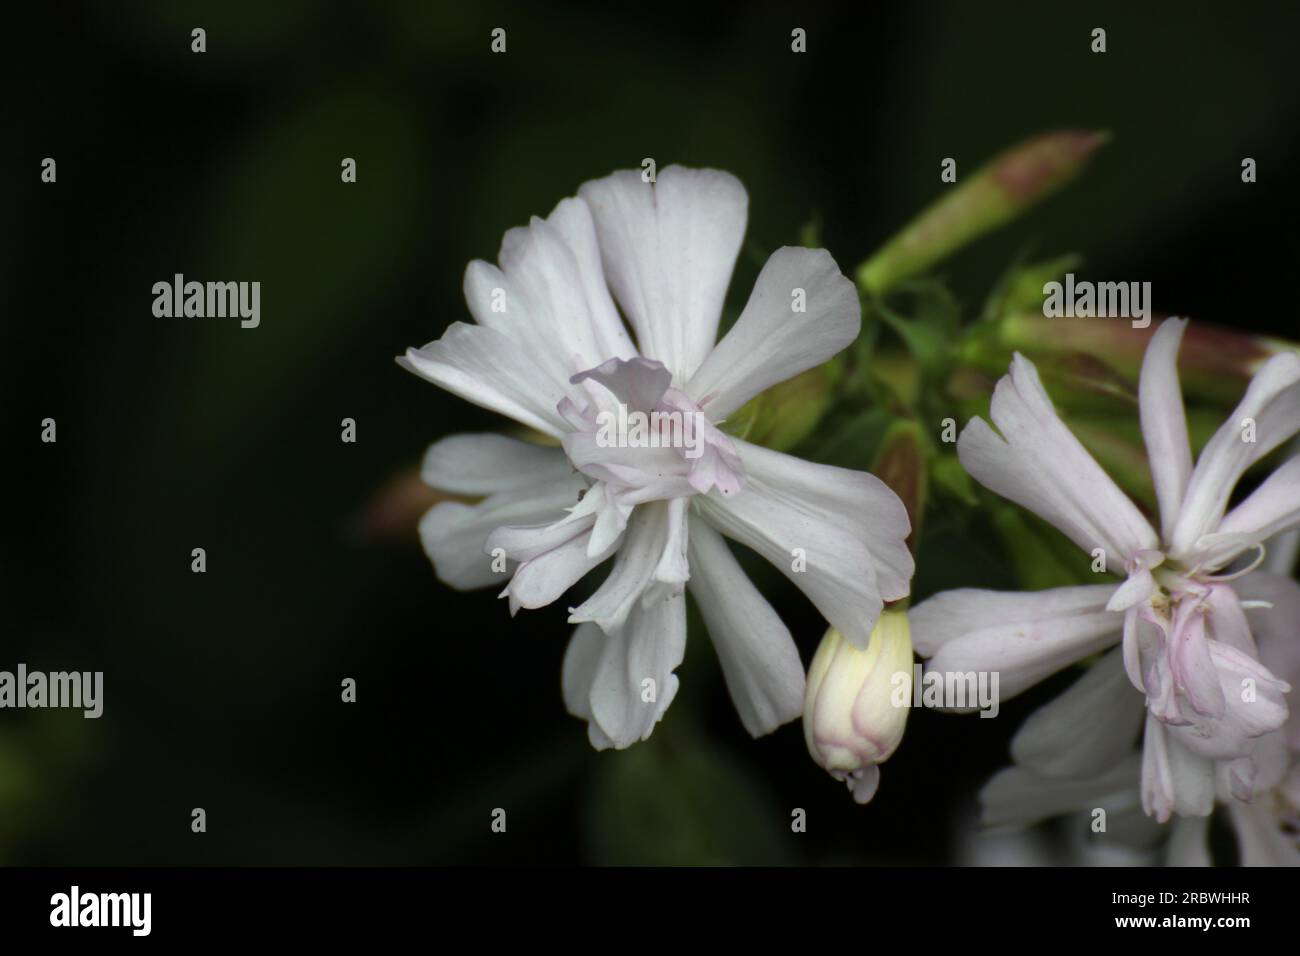 Flower from the Silene genus (campion/catchfly). Stock Photo